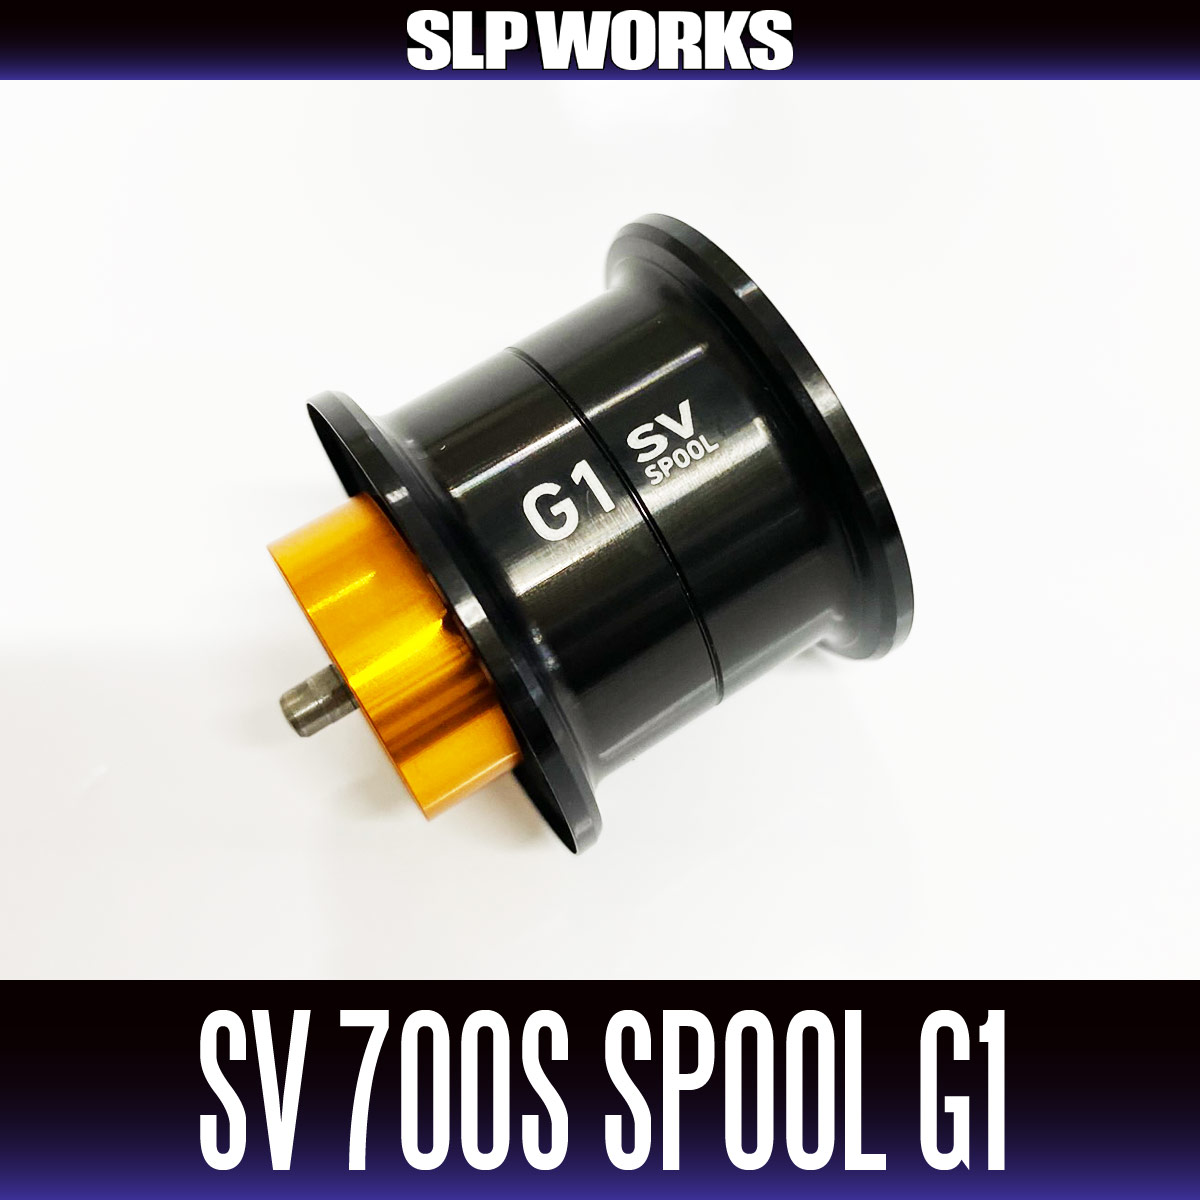 Daiwa Slp Works RCSB CT SV 700S Spool G1 Black 